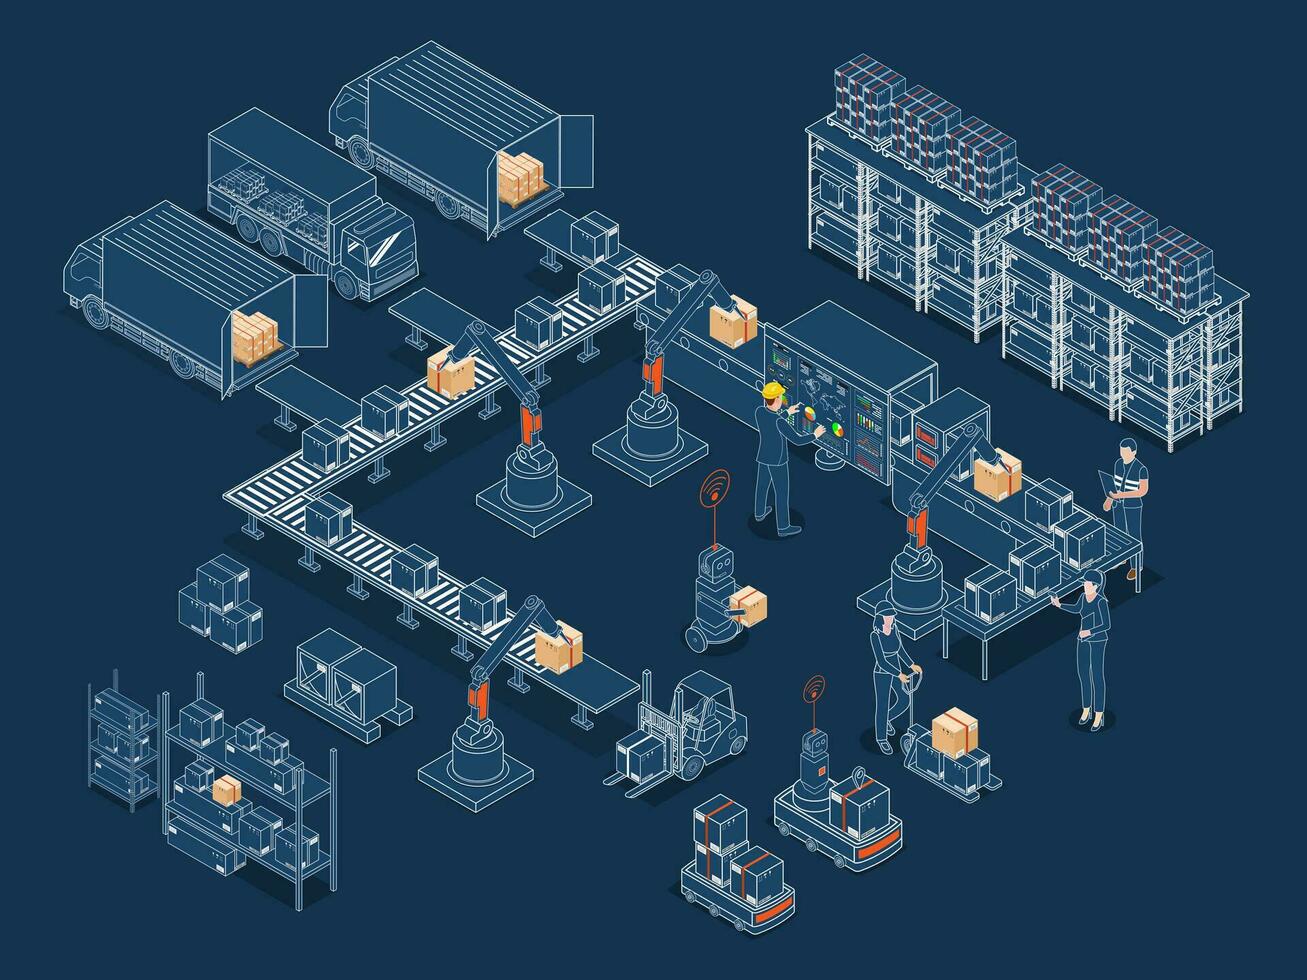 automatisiert Warenhaus Roboter und Clever Warenhaus Technologie Konzept mit Warenhaus Automatisierung System, autonom Roboter, Transport Betrieb Service. Vektor Illustration eps 10